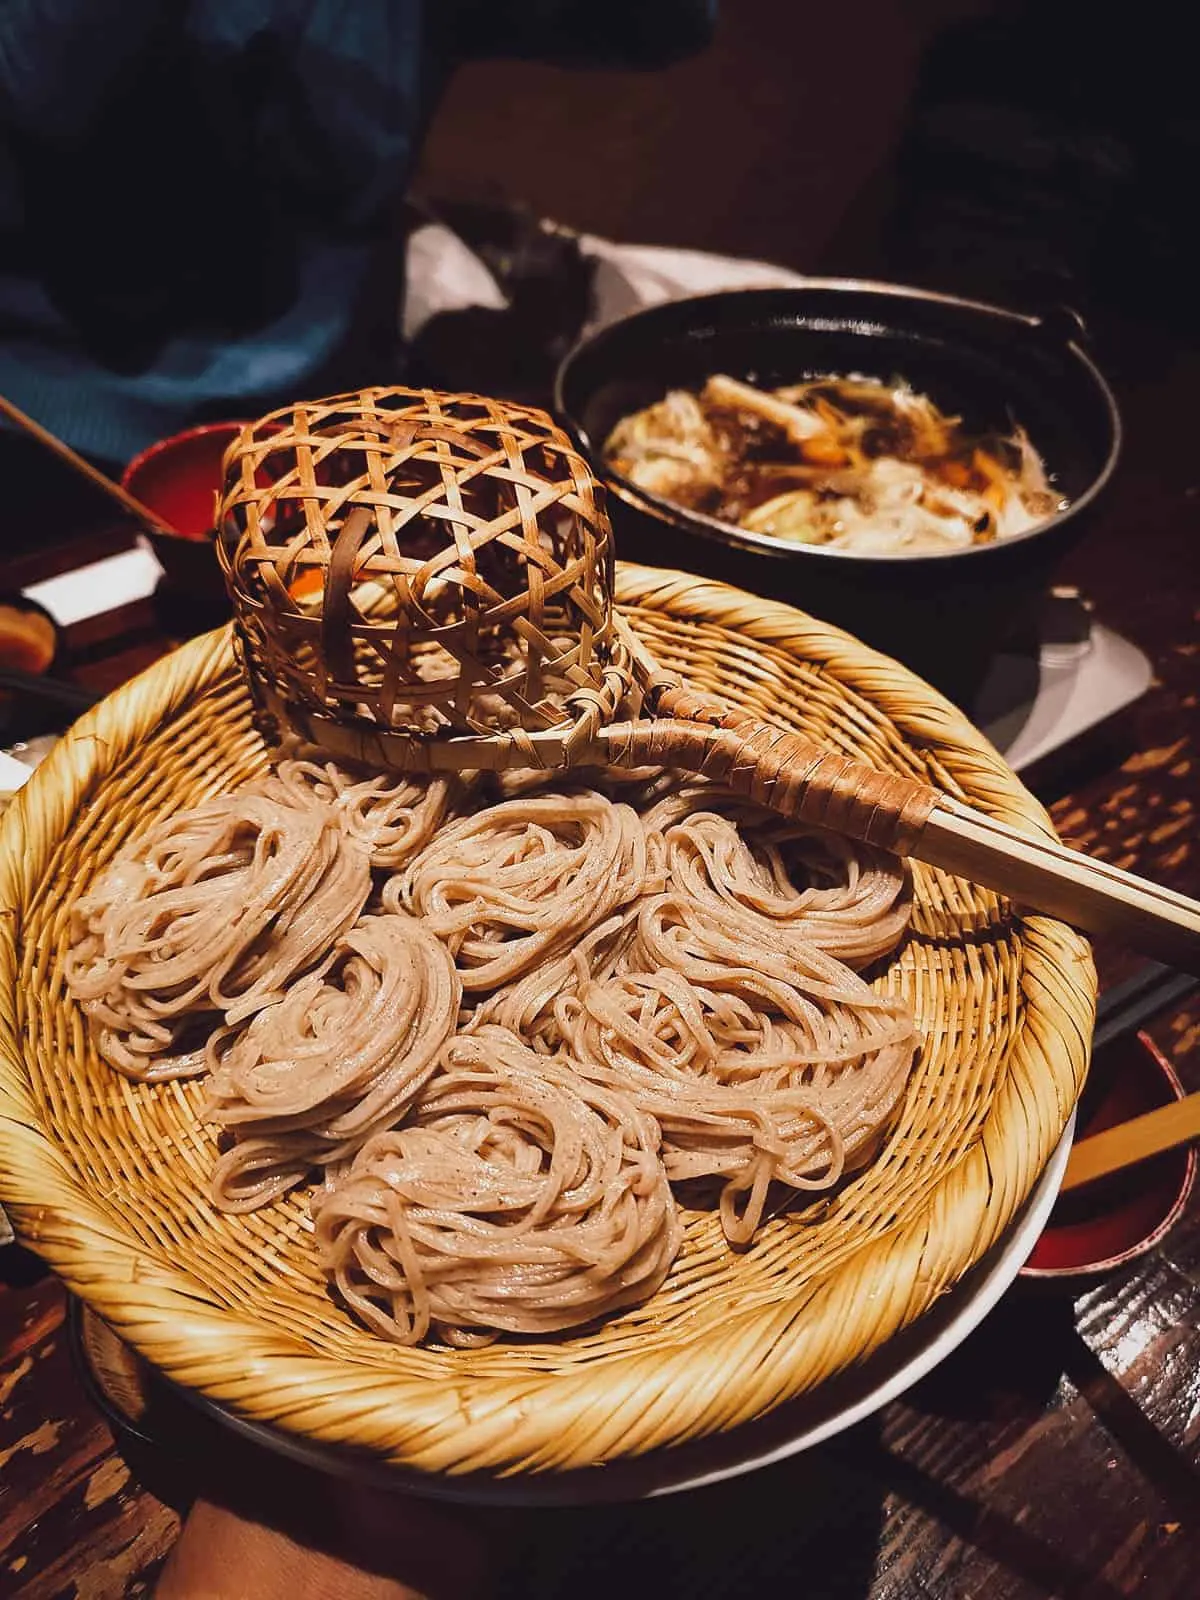 Toji soba, a type of shinshu soba buckwheat noodles cooked in a hot pot